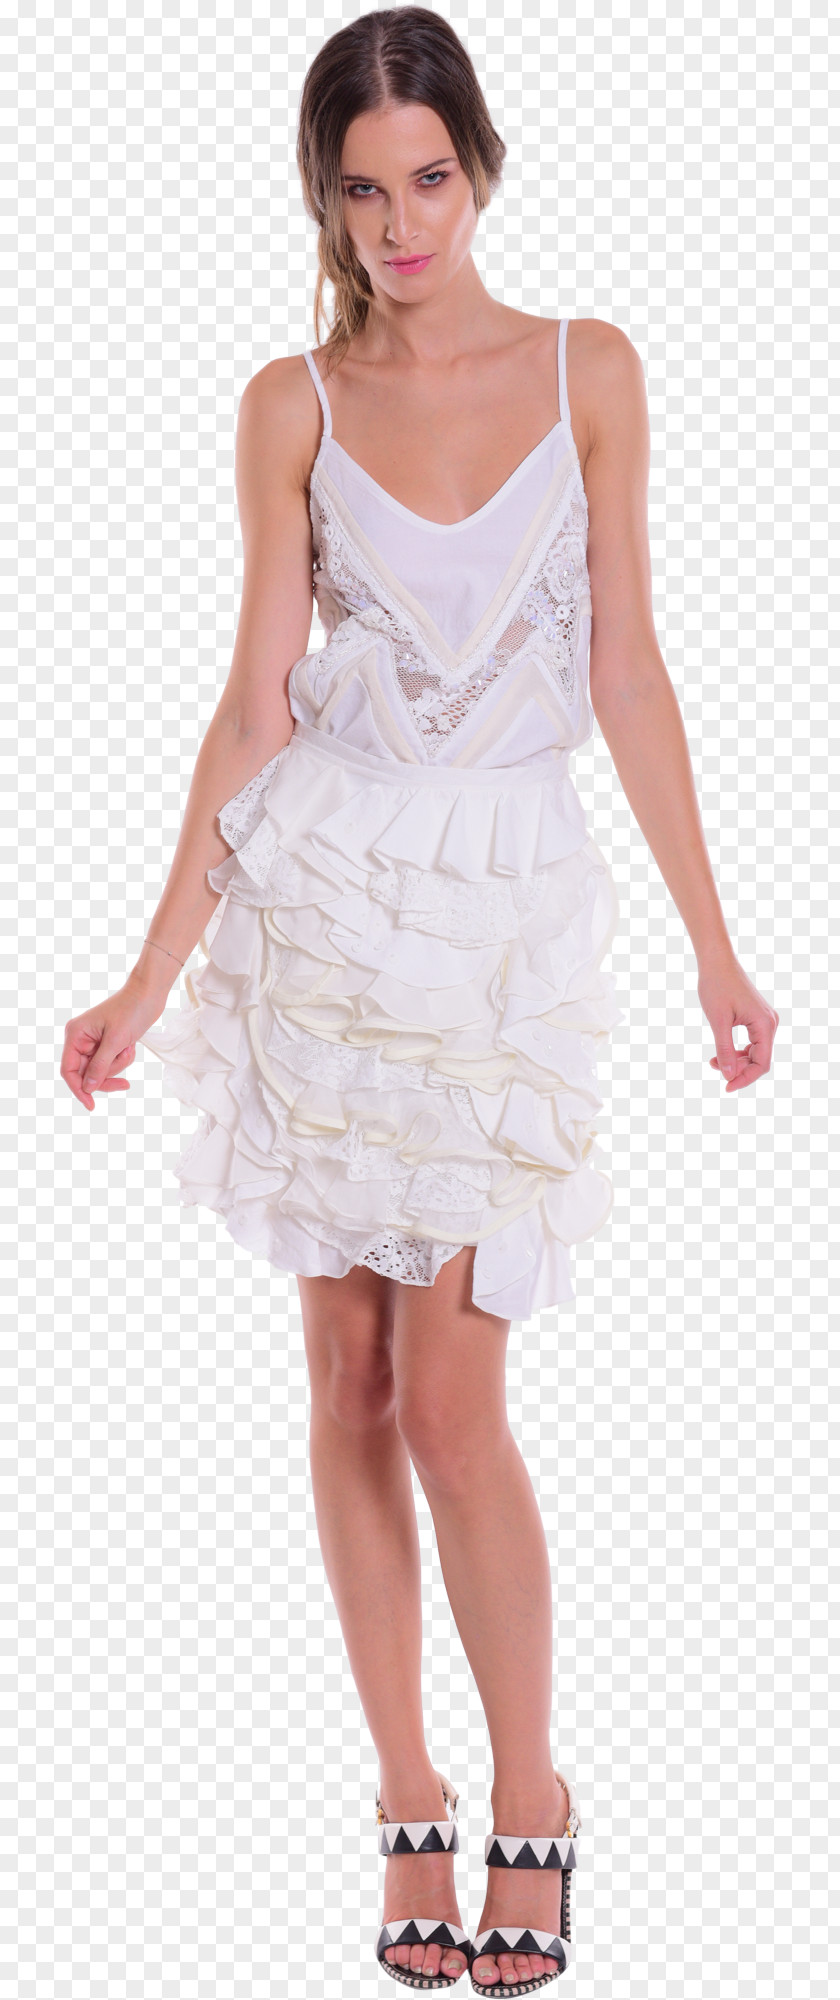 White Tank Top Wedding Dress Clothing Fashion Cocktail PNG